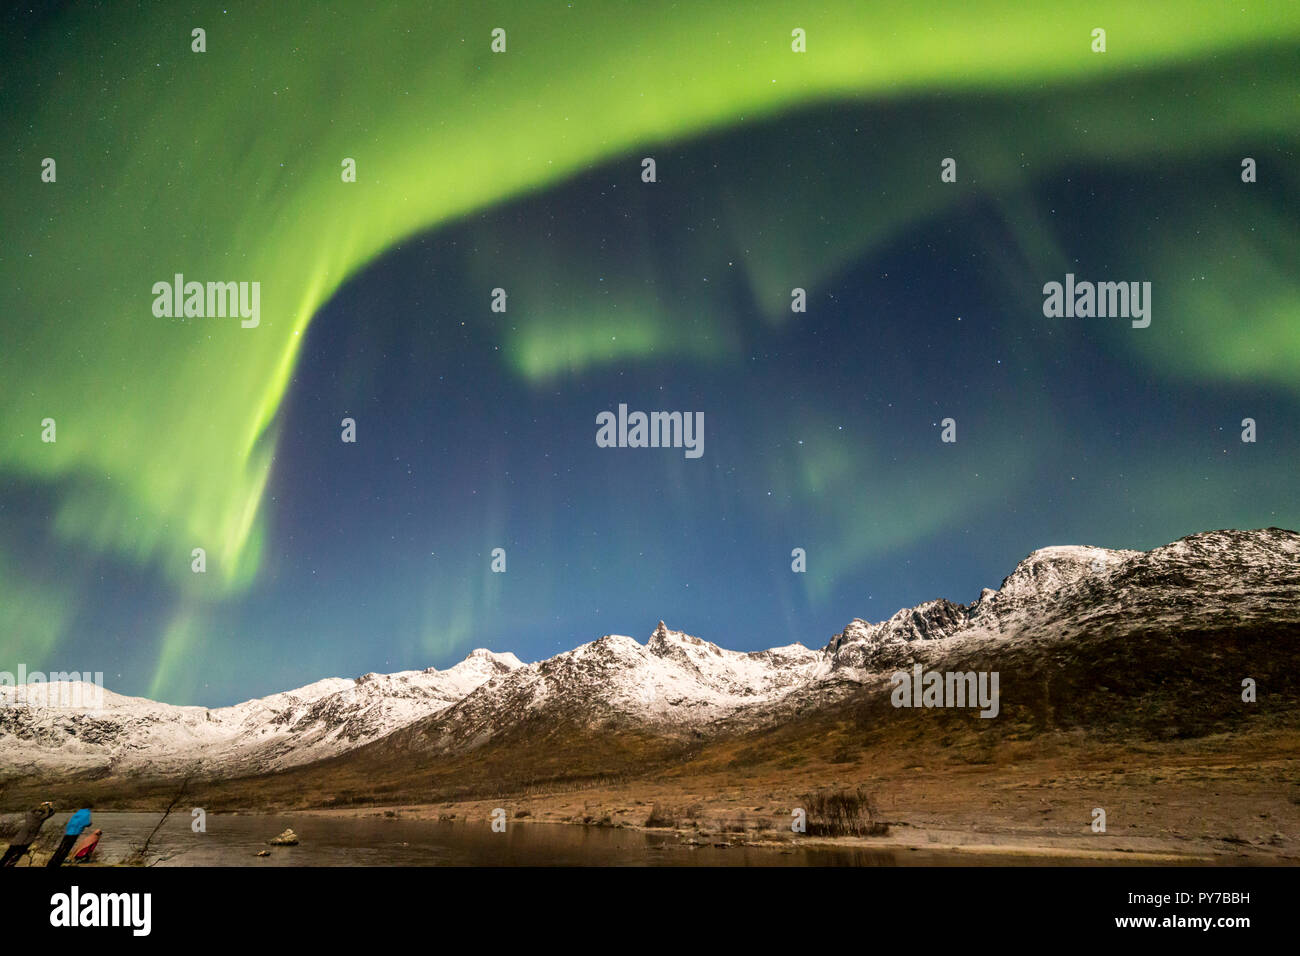 Aurora borealis, Northern Lights, aktive, farbigen Vorhängen, coronas, über Nacht Himmel, Polarkreis, Kvaloya, Insel, Troms, Tromso, Norwegen Stockfoto